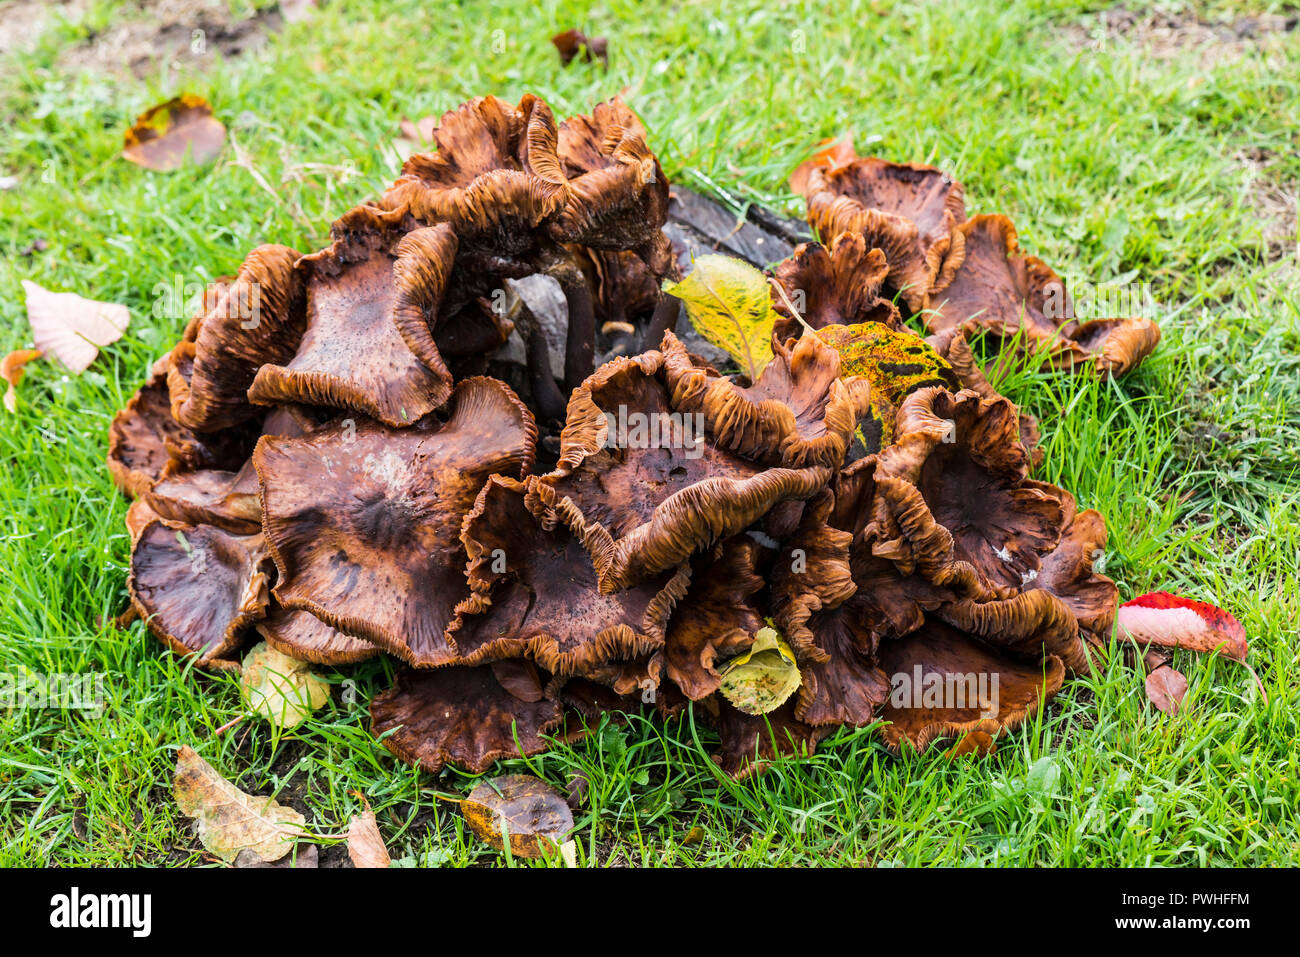 Fungi growing around an old tree stump Stock Photo